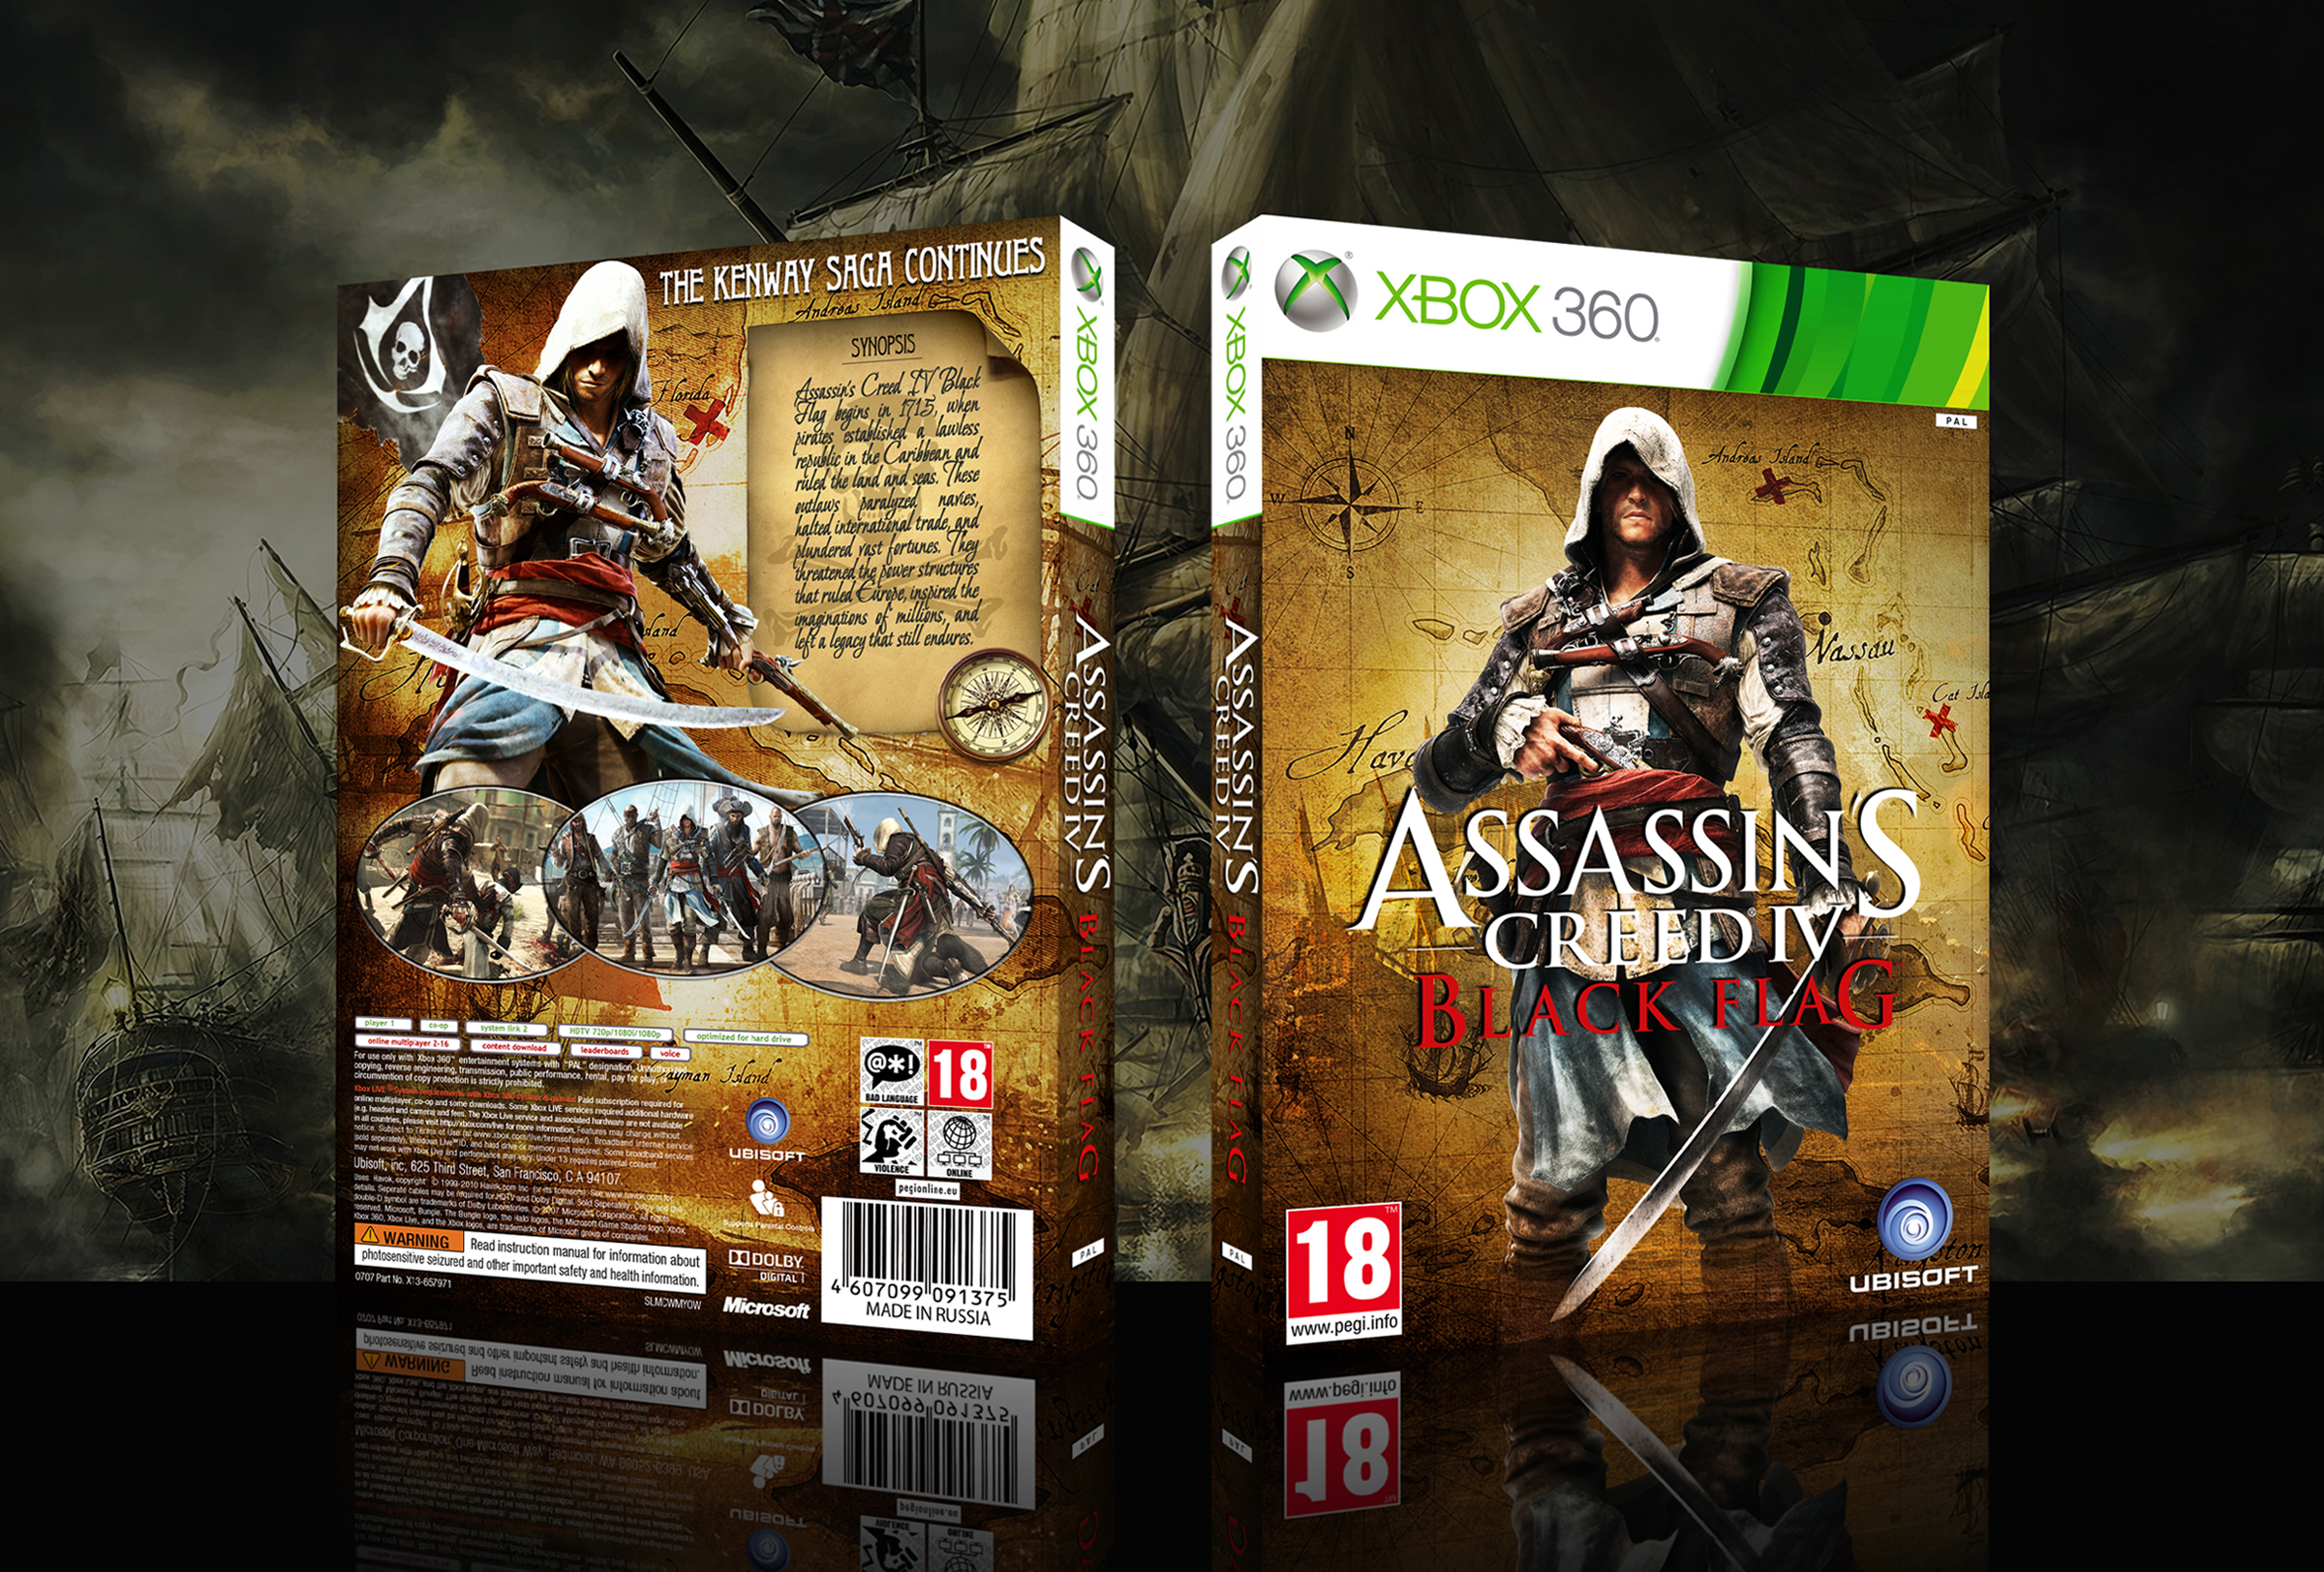 Assassin s xbox 360. Ассасин Крид 4 на Xbox 360. Assassins Creed Xbox 360 коробка. Ассасин Крид 4 обложка хбокс 360. AC Black Flag Xbox 360 Cover.